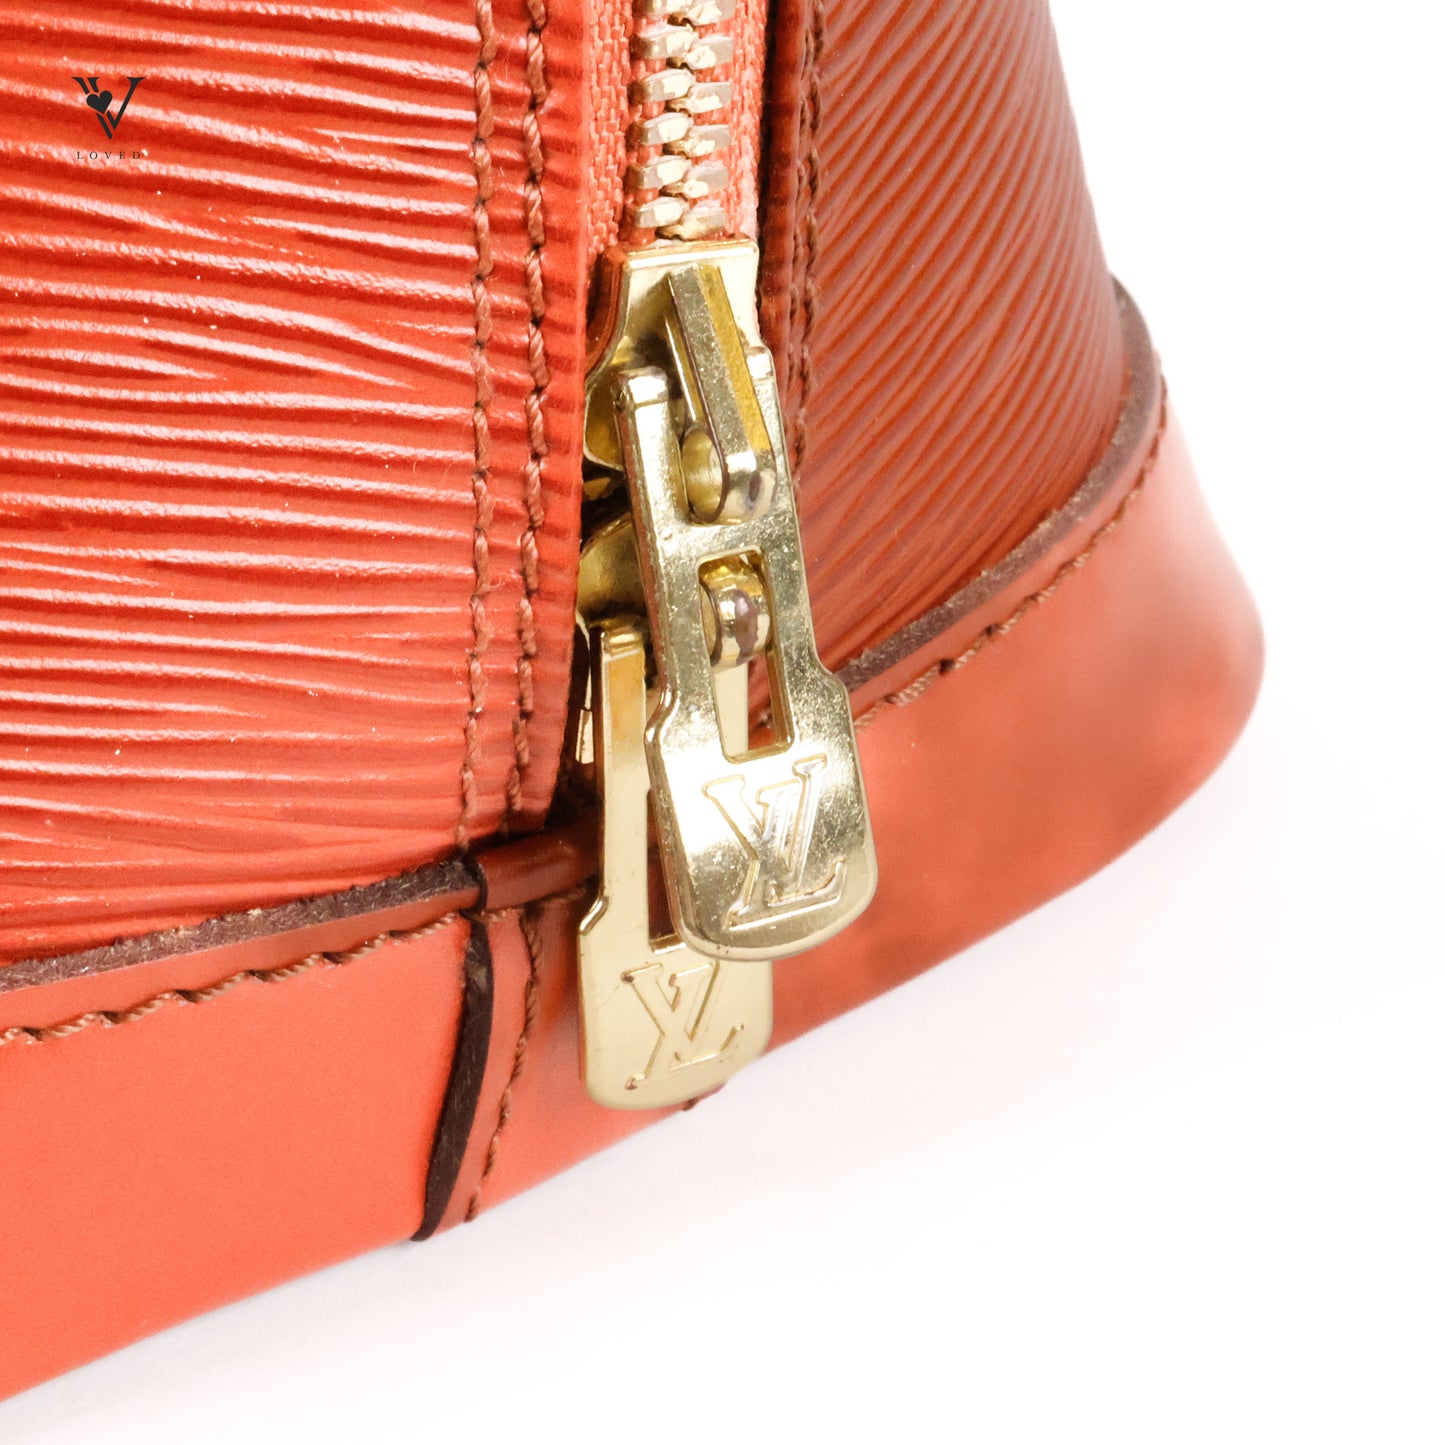 Alma Leather Handbag